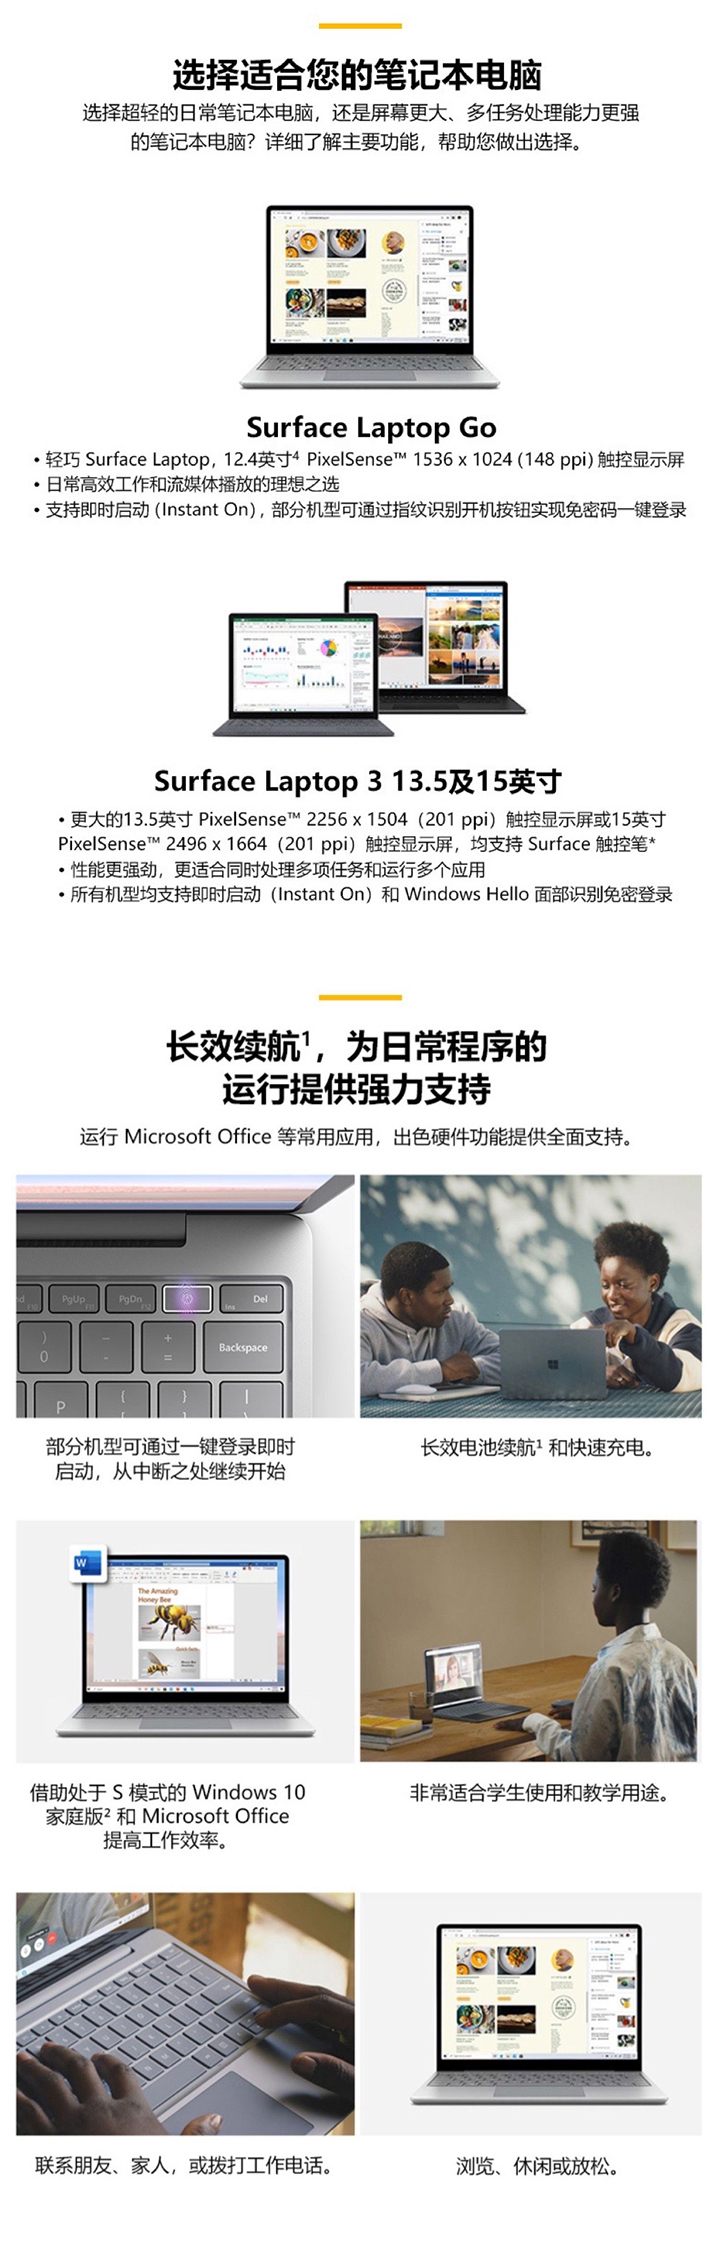 Surface Laptop Go免费试用,评测